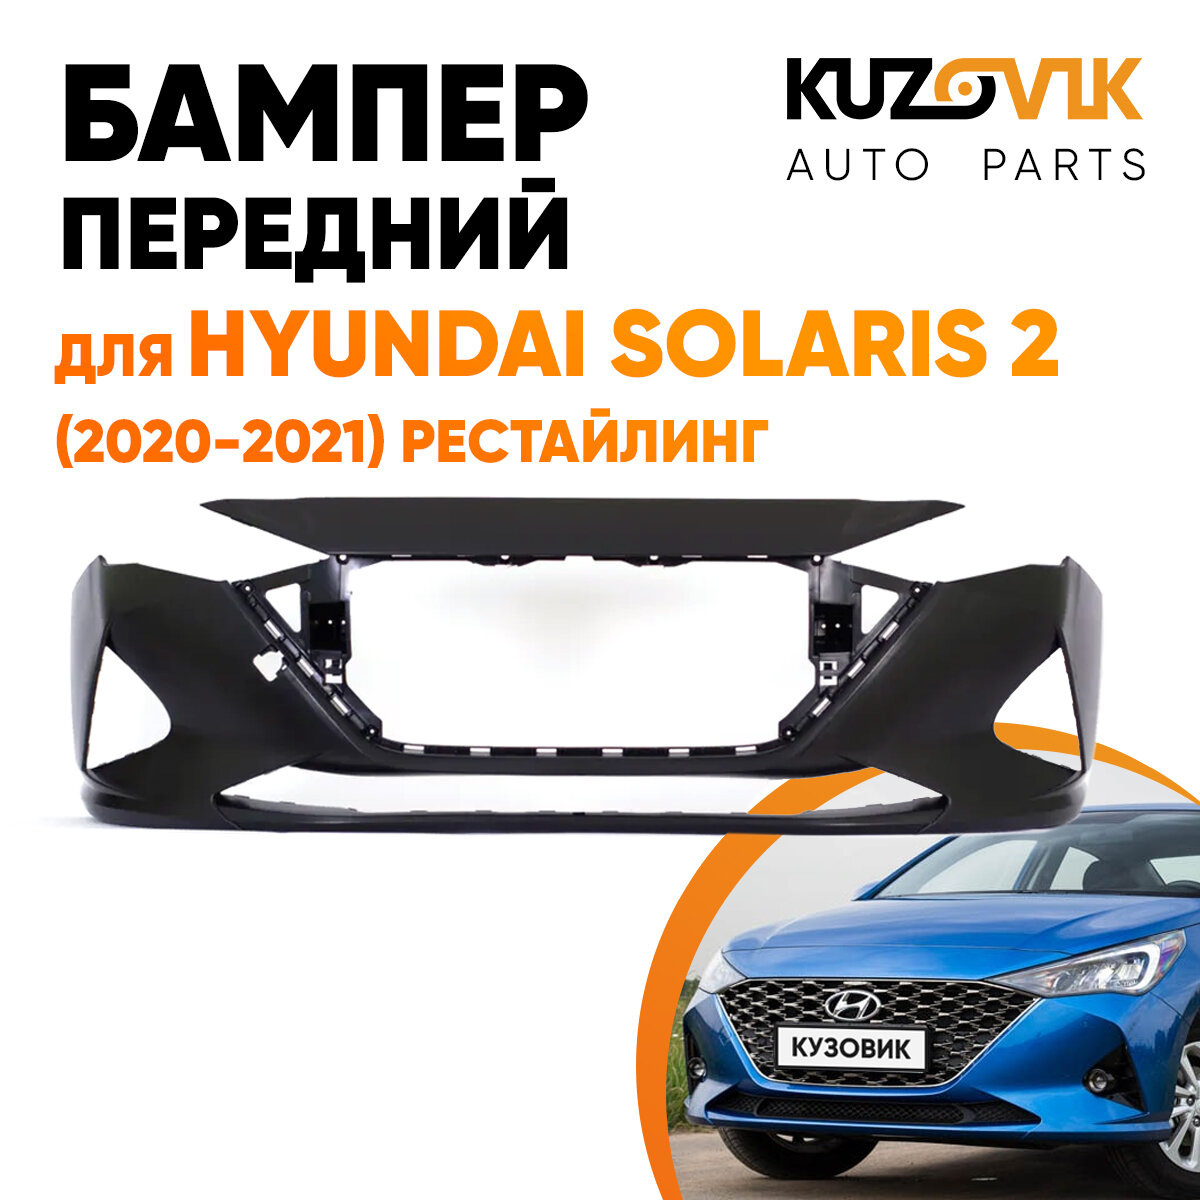 Бампер передний Hyundai Solaris Хендай Солярис 2 (2020-2021) рестайлинг